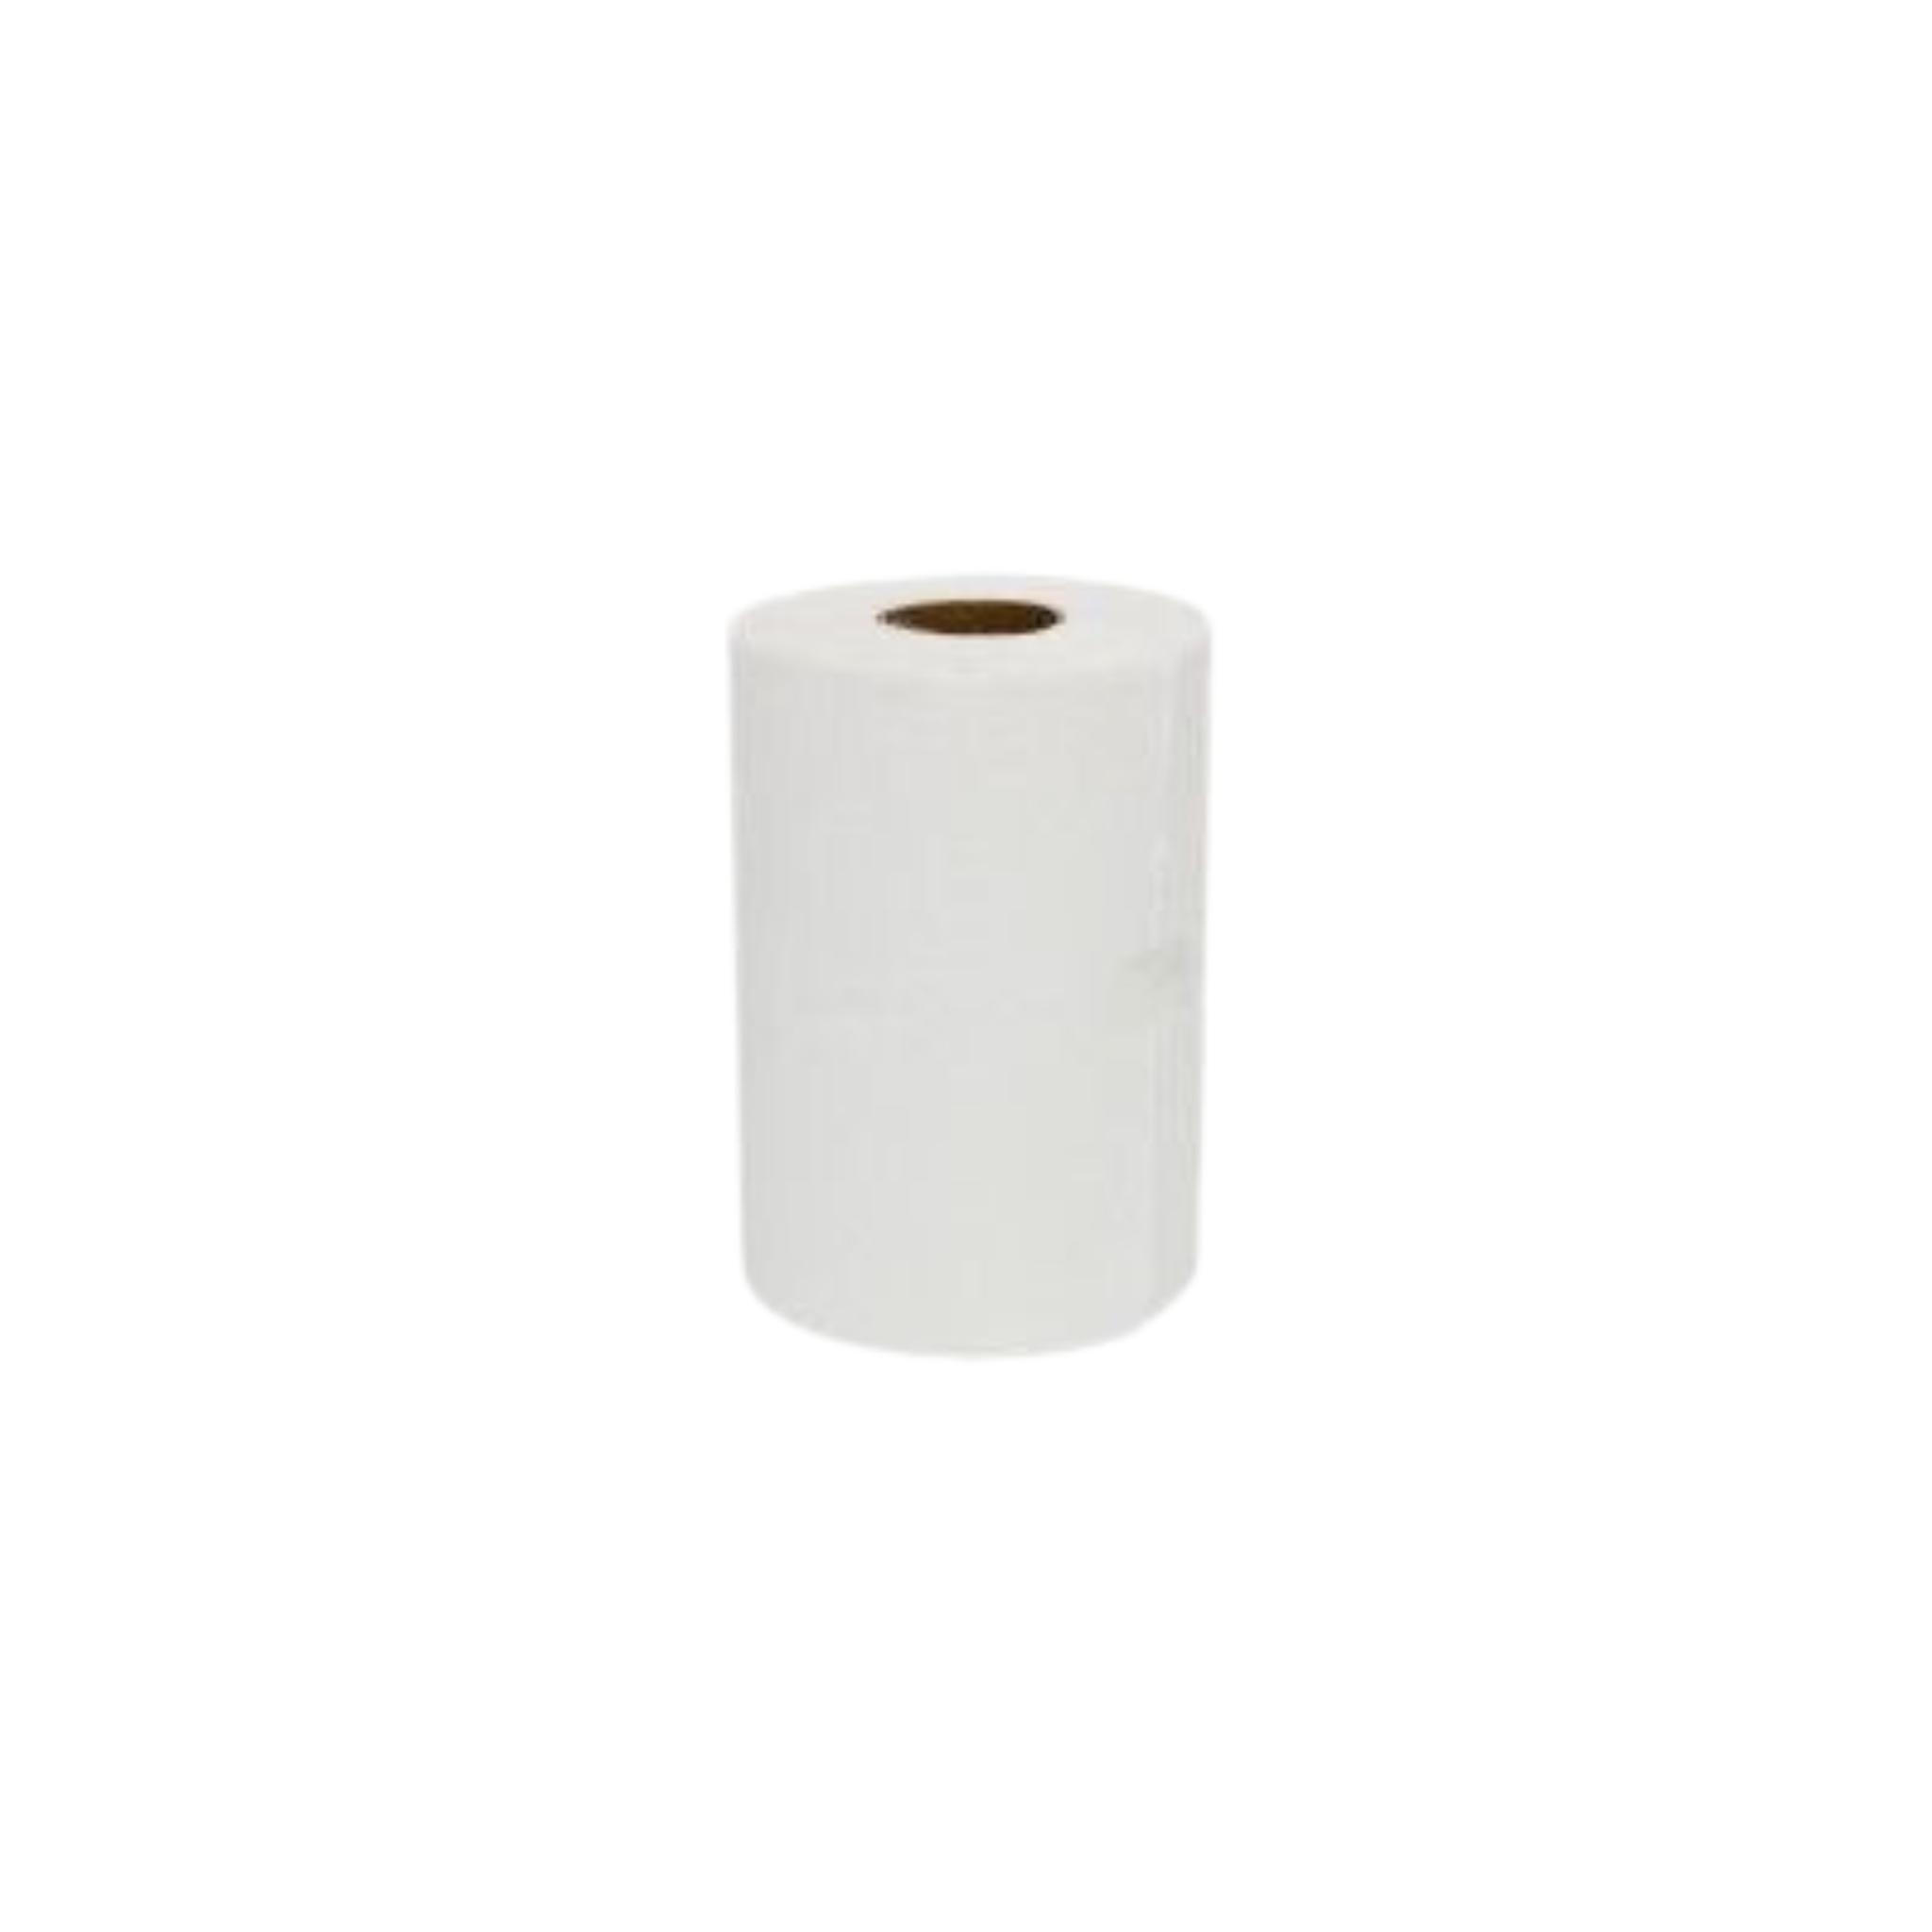 Joey Hand Towel Roll 1Ply 16x80m